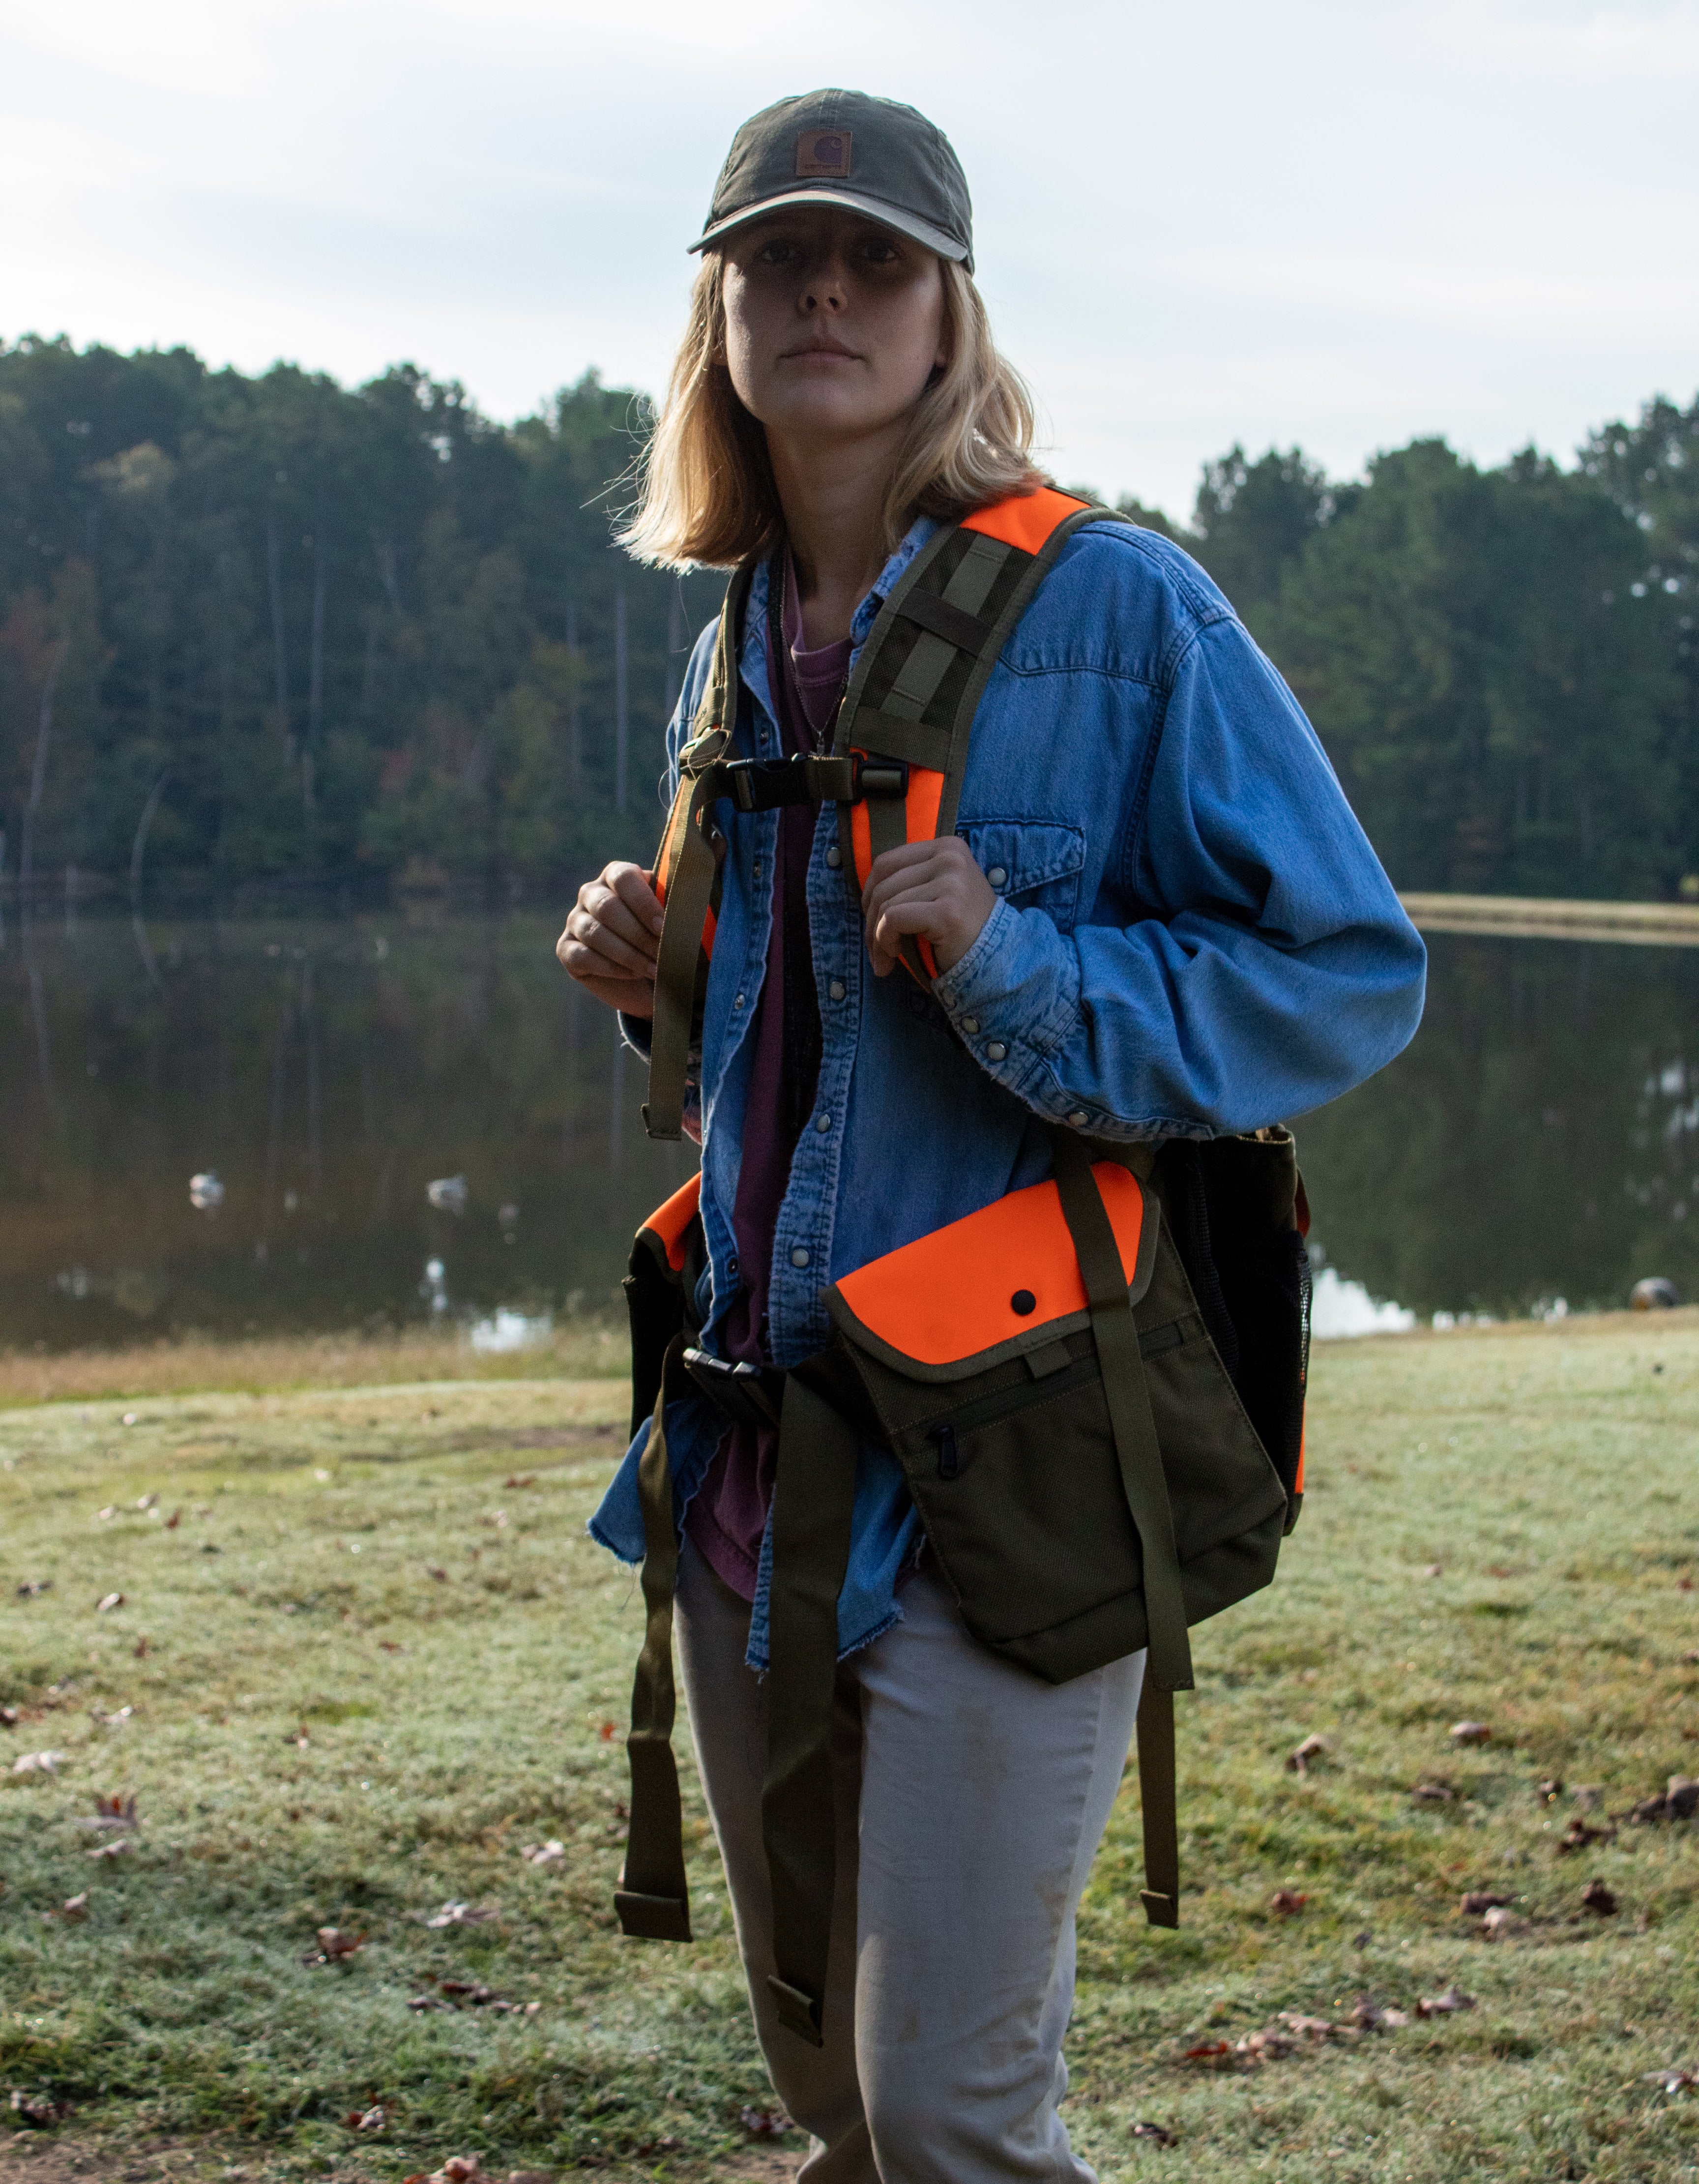 Orvis Pro Series Hunting Vest